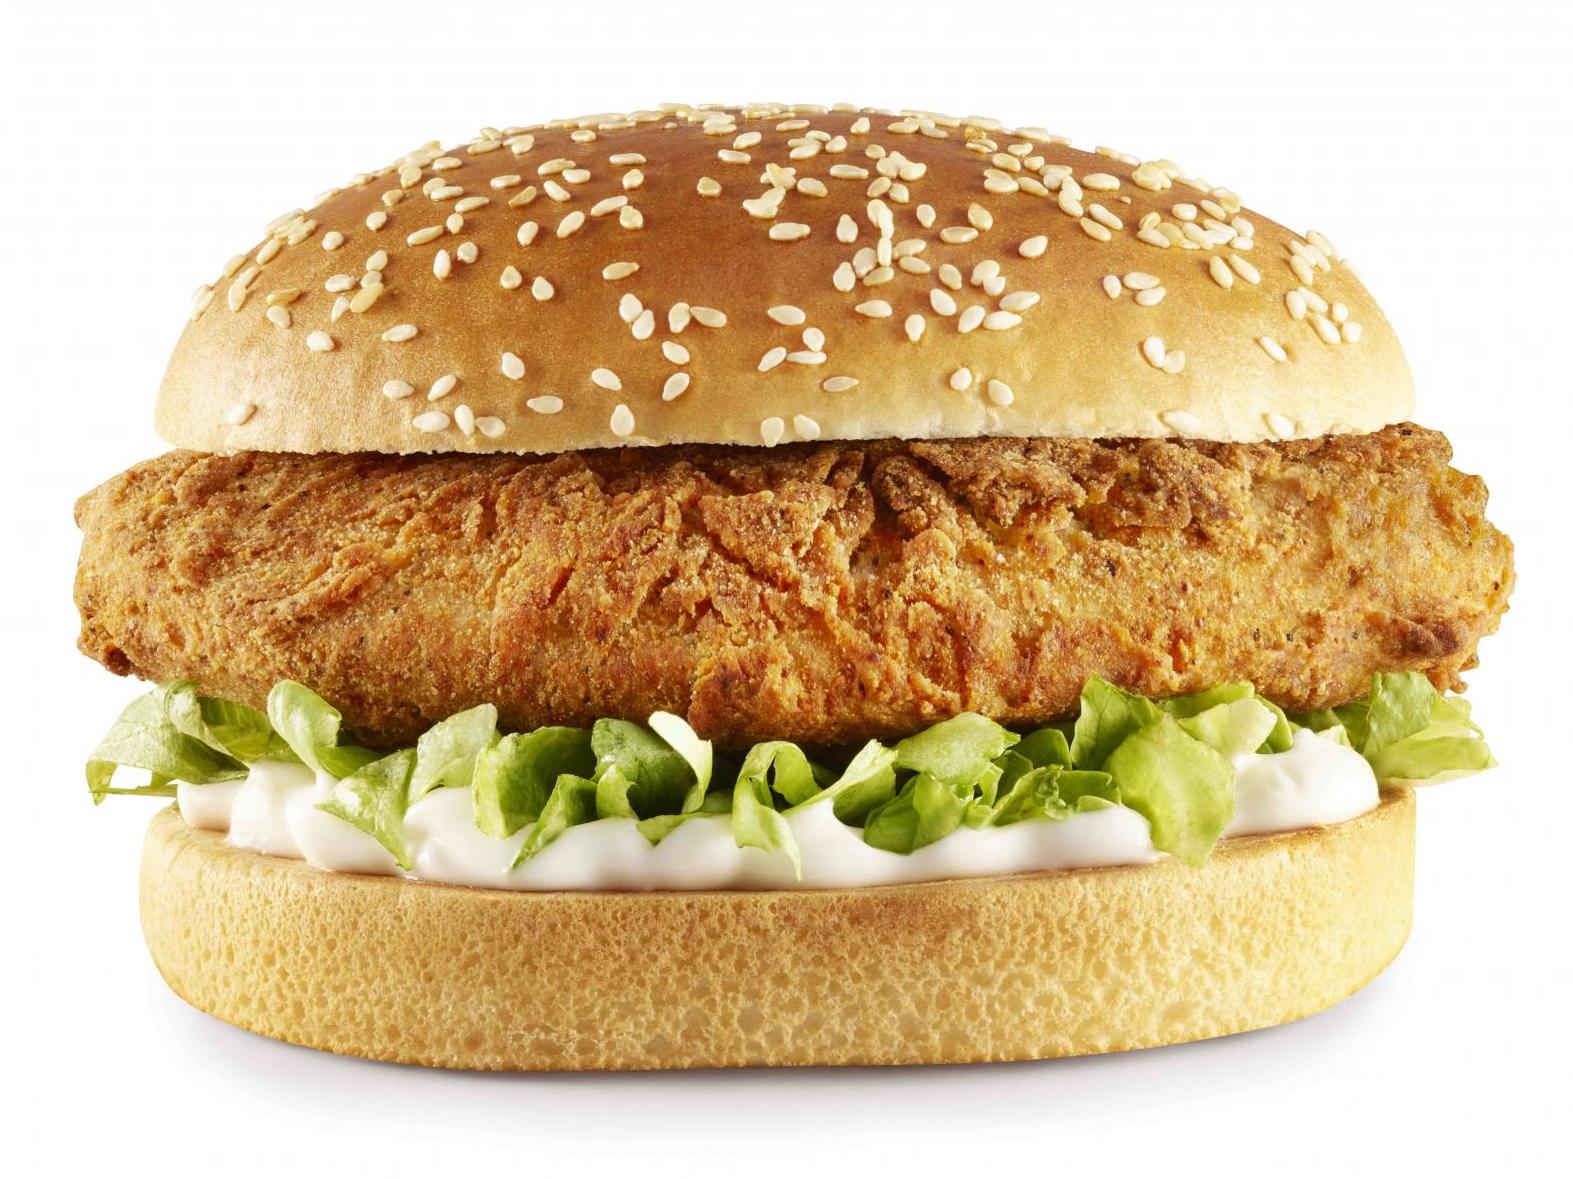 The vegan 'Imposter' burger